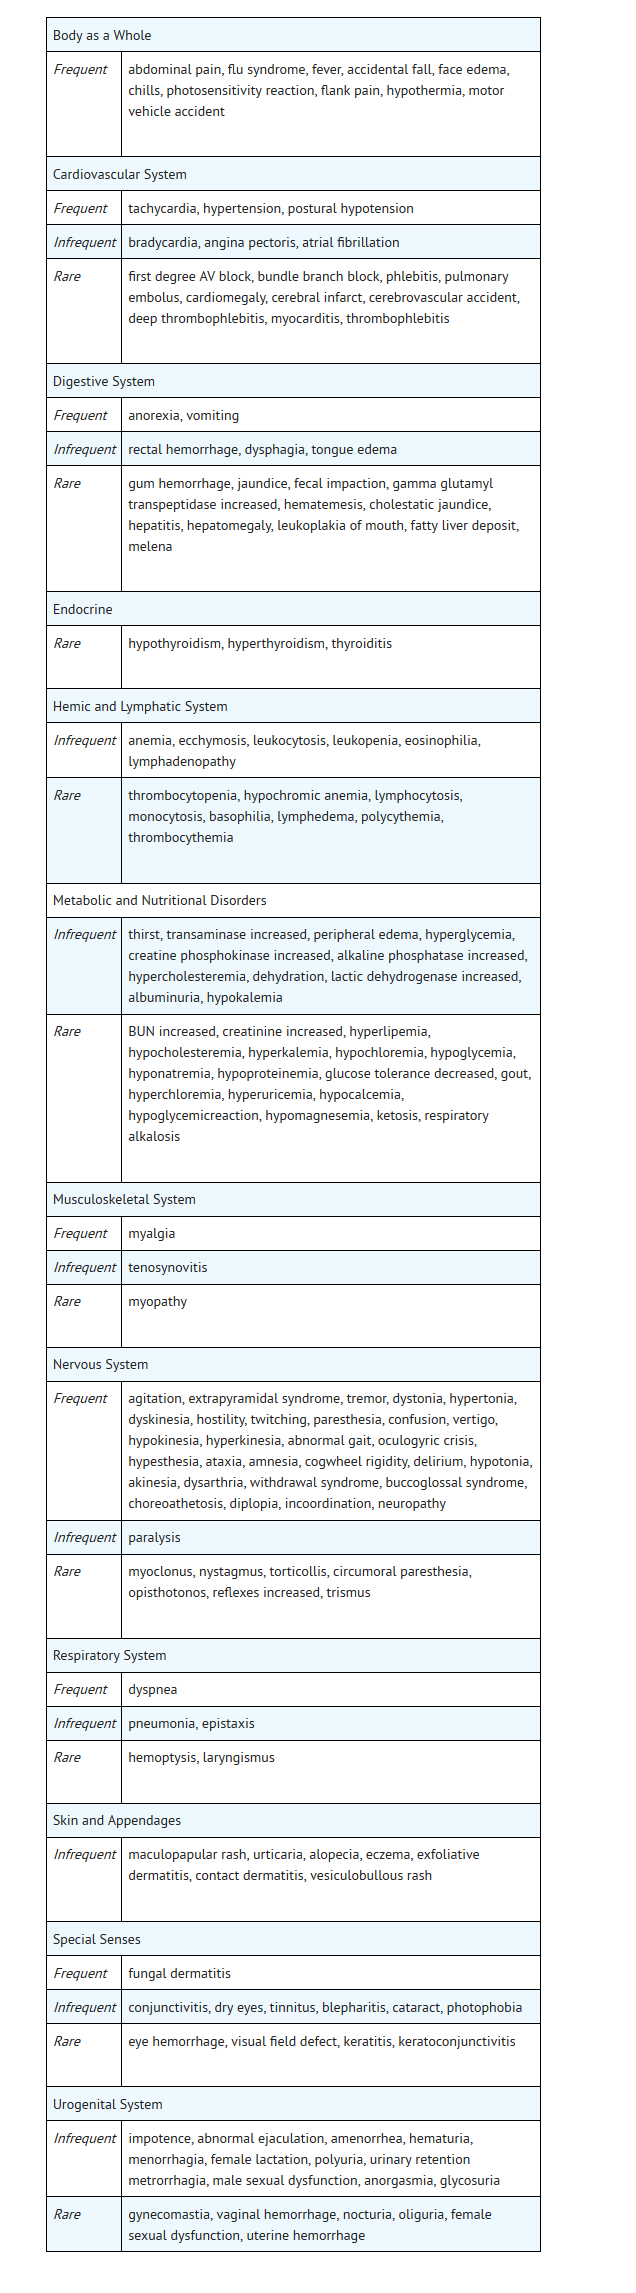 File:Ziprasidone adverse reactions.png